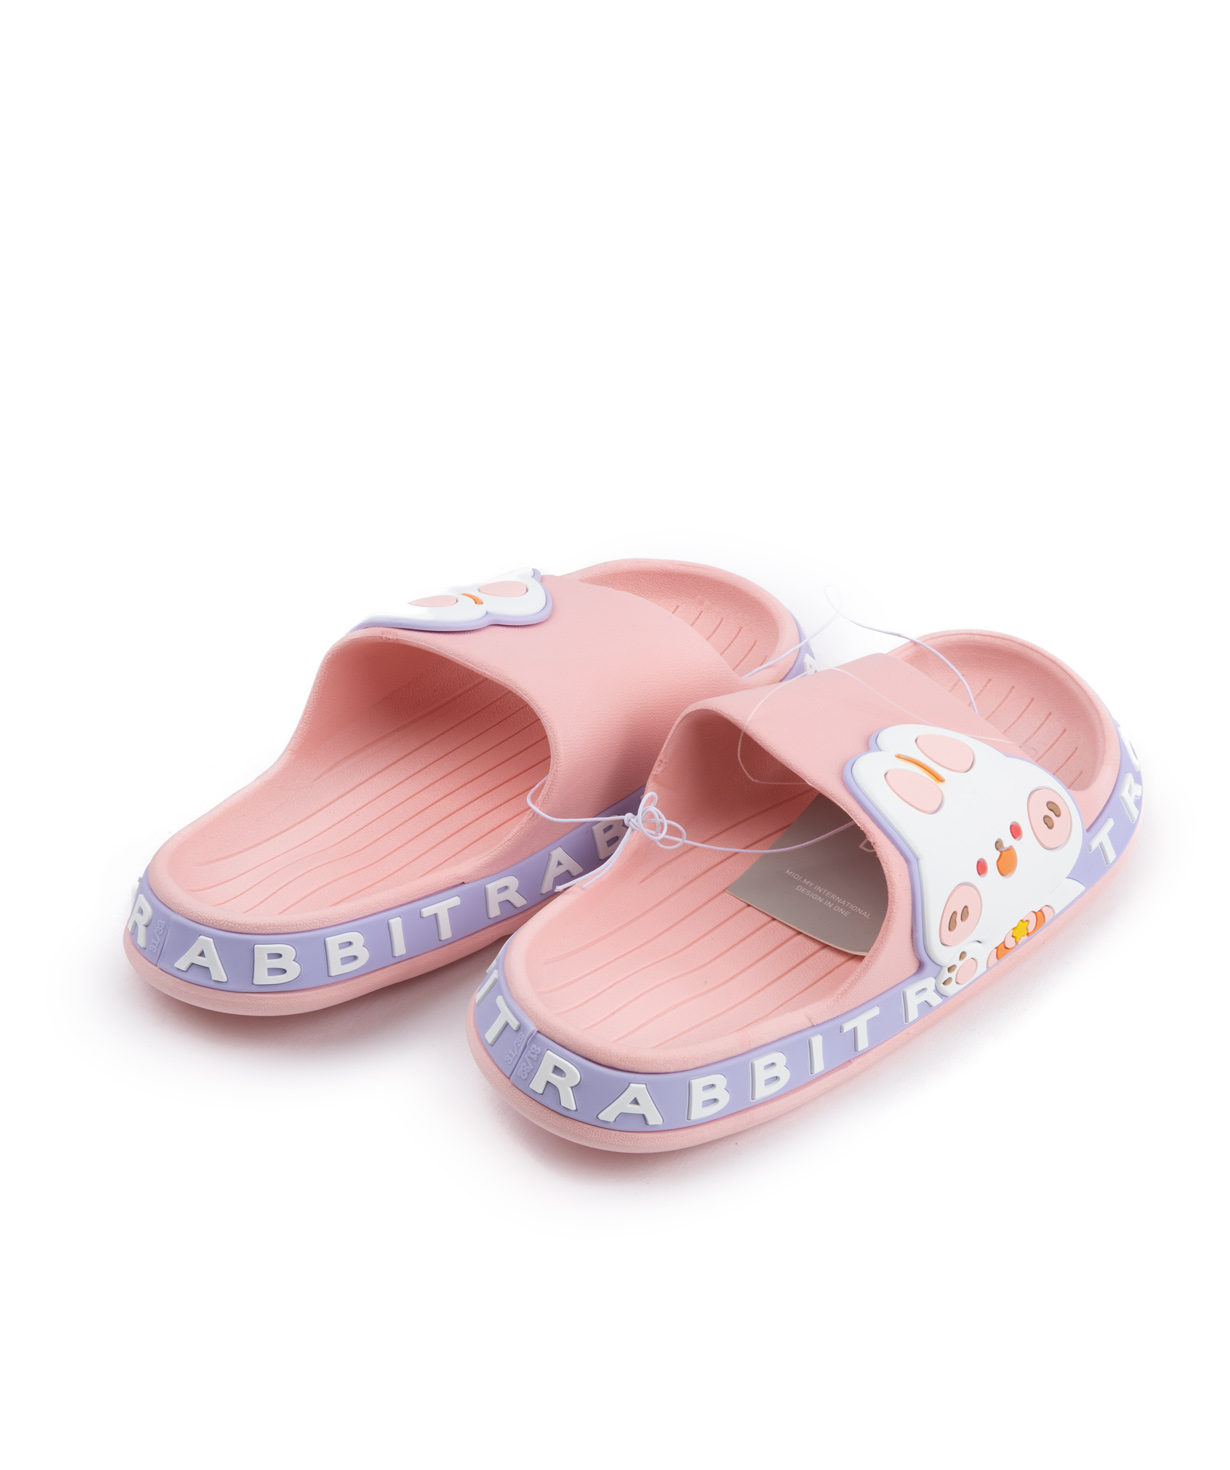 Slippers «Rabbit» pink, 31-32